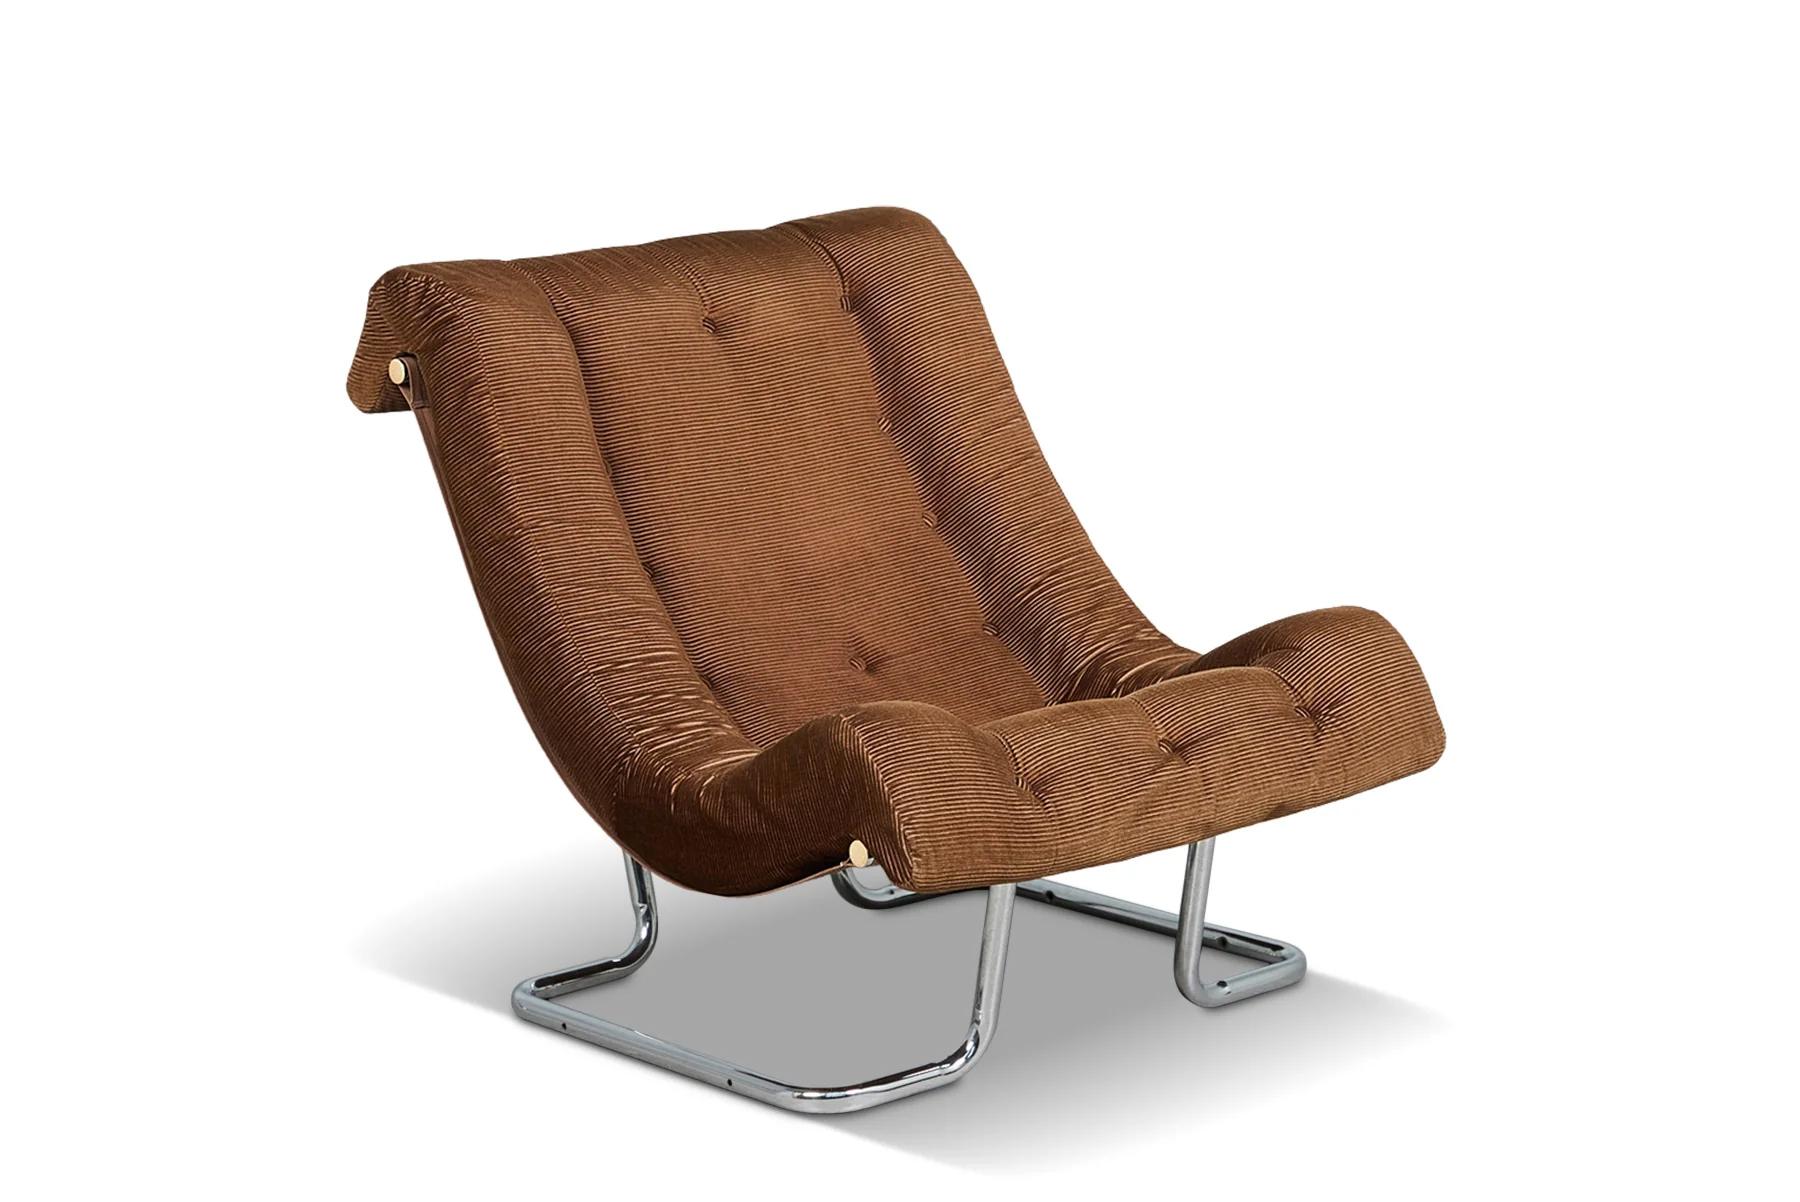 Origin: Sweden
Designer: Ruud Ekstrand & Christer Norman
Manufacturer: Dux
Era: 1970s
Materials: Chromed Steel, Cuduroy
Measurements: 31.5″ wide x 35.5″ deep x 35.5″ tall, Seat Height: 15.75